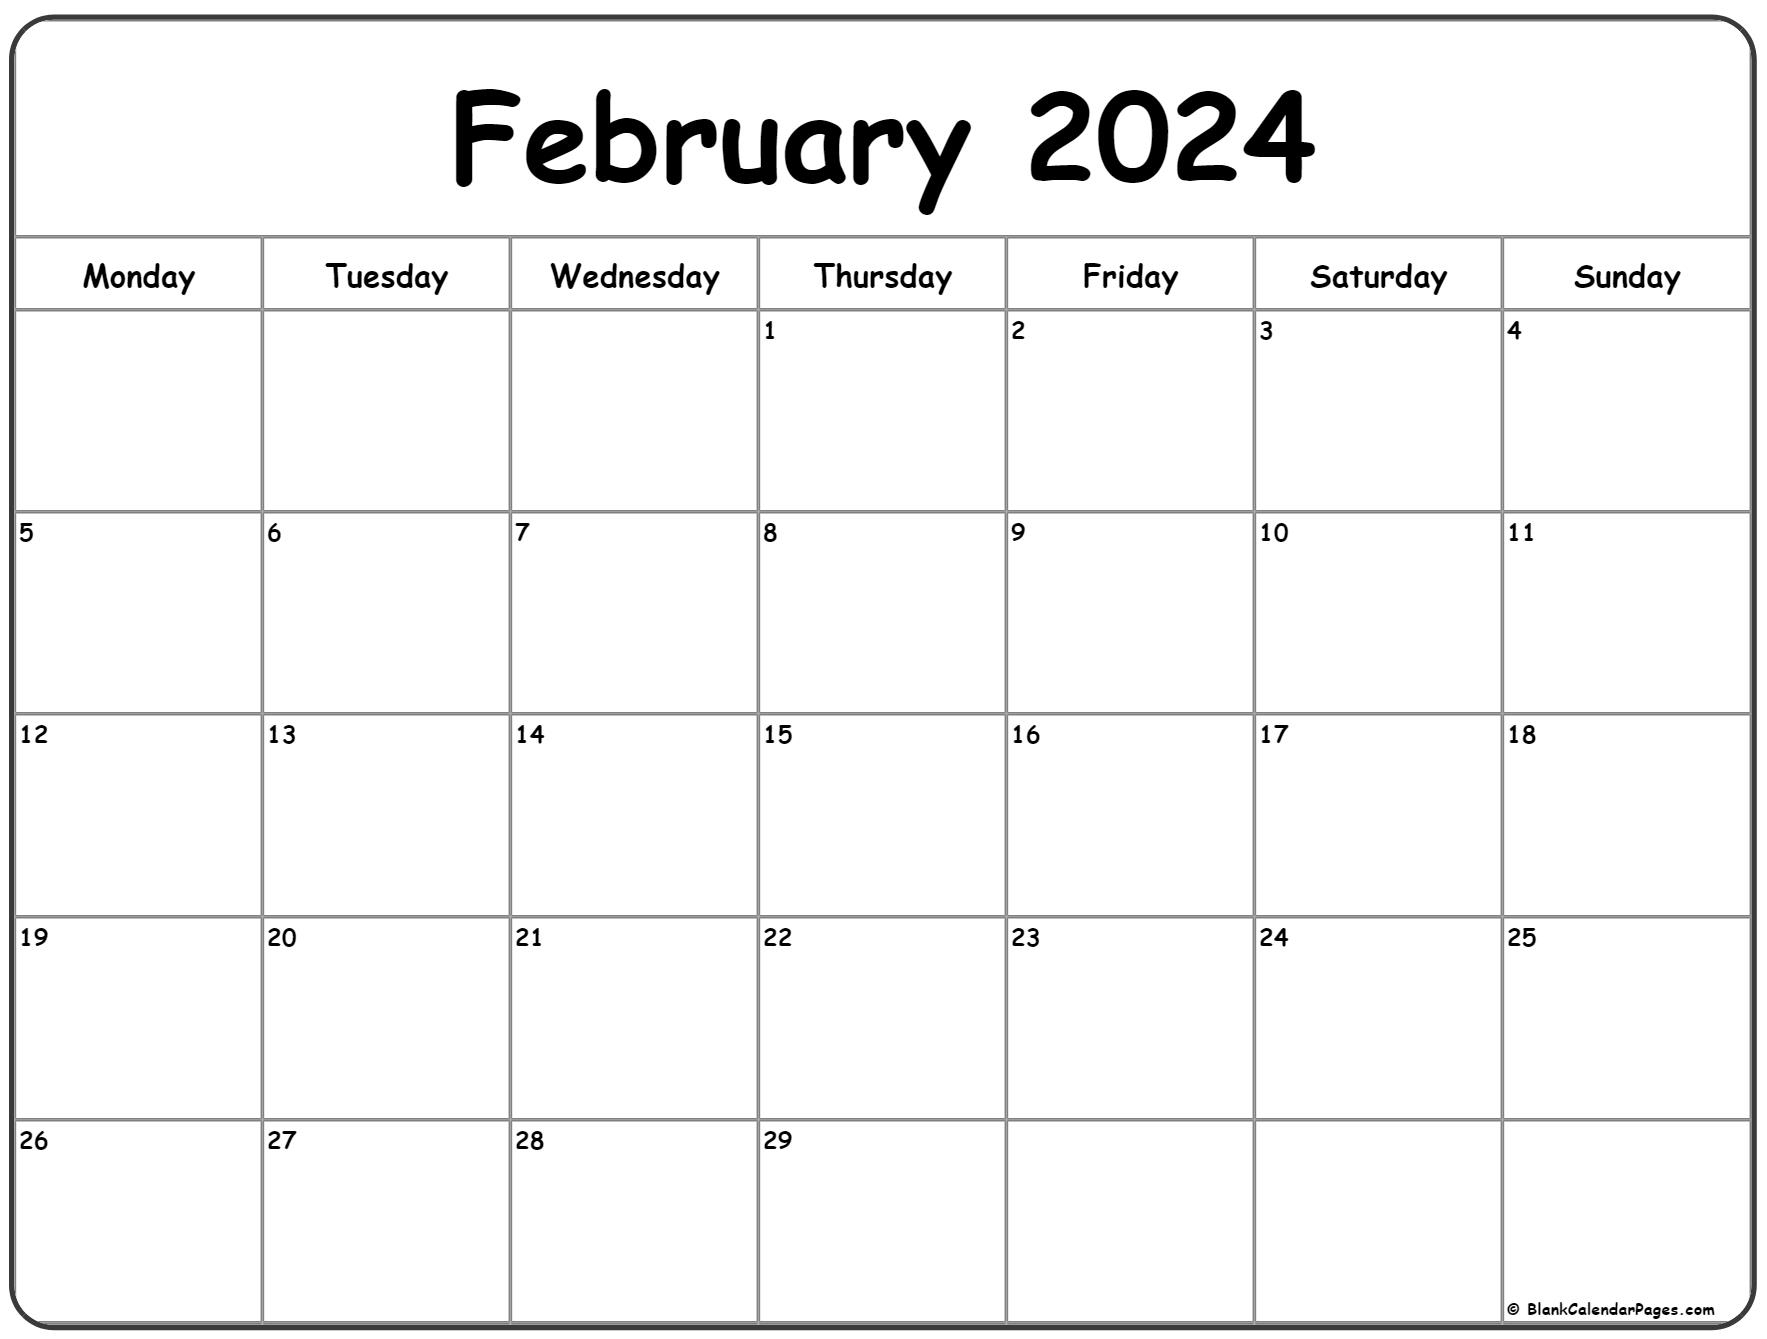 February 2024 Monday Calendar | Monday To Sunday for Blank Calendar Printable February 2024